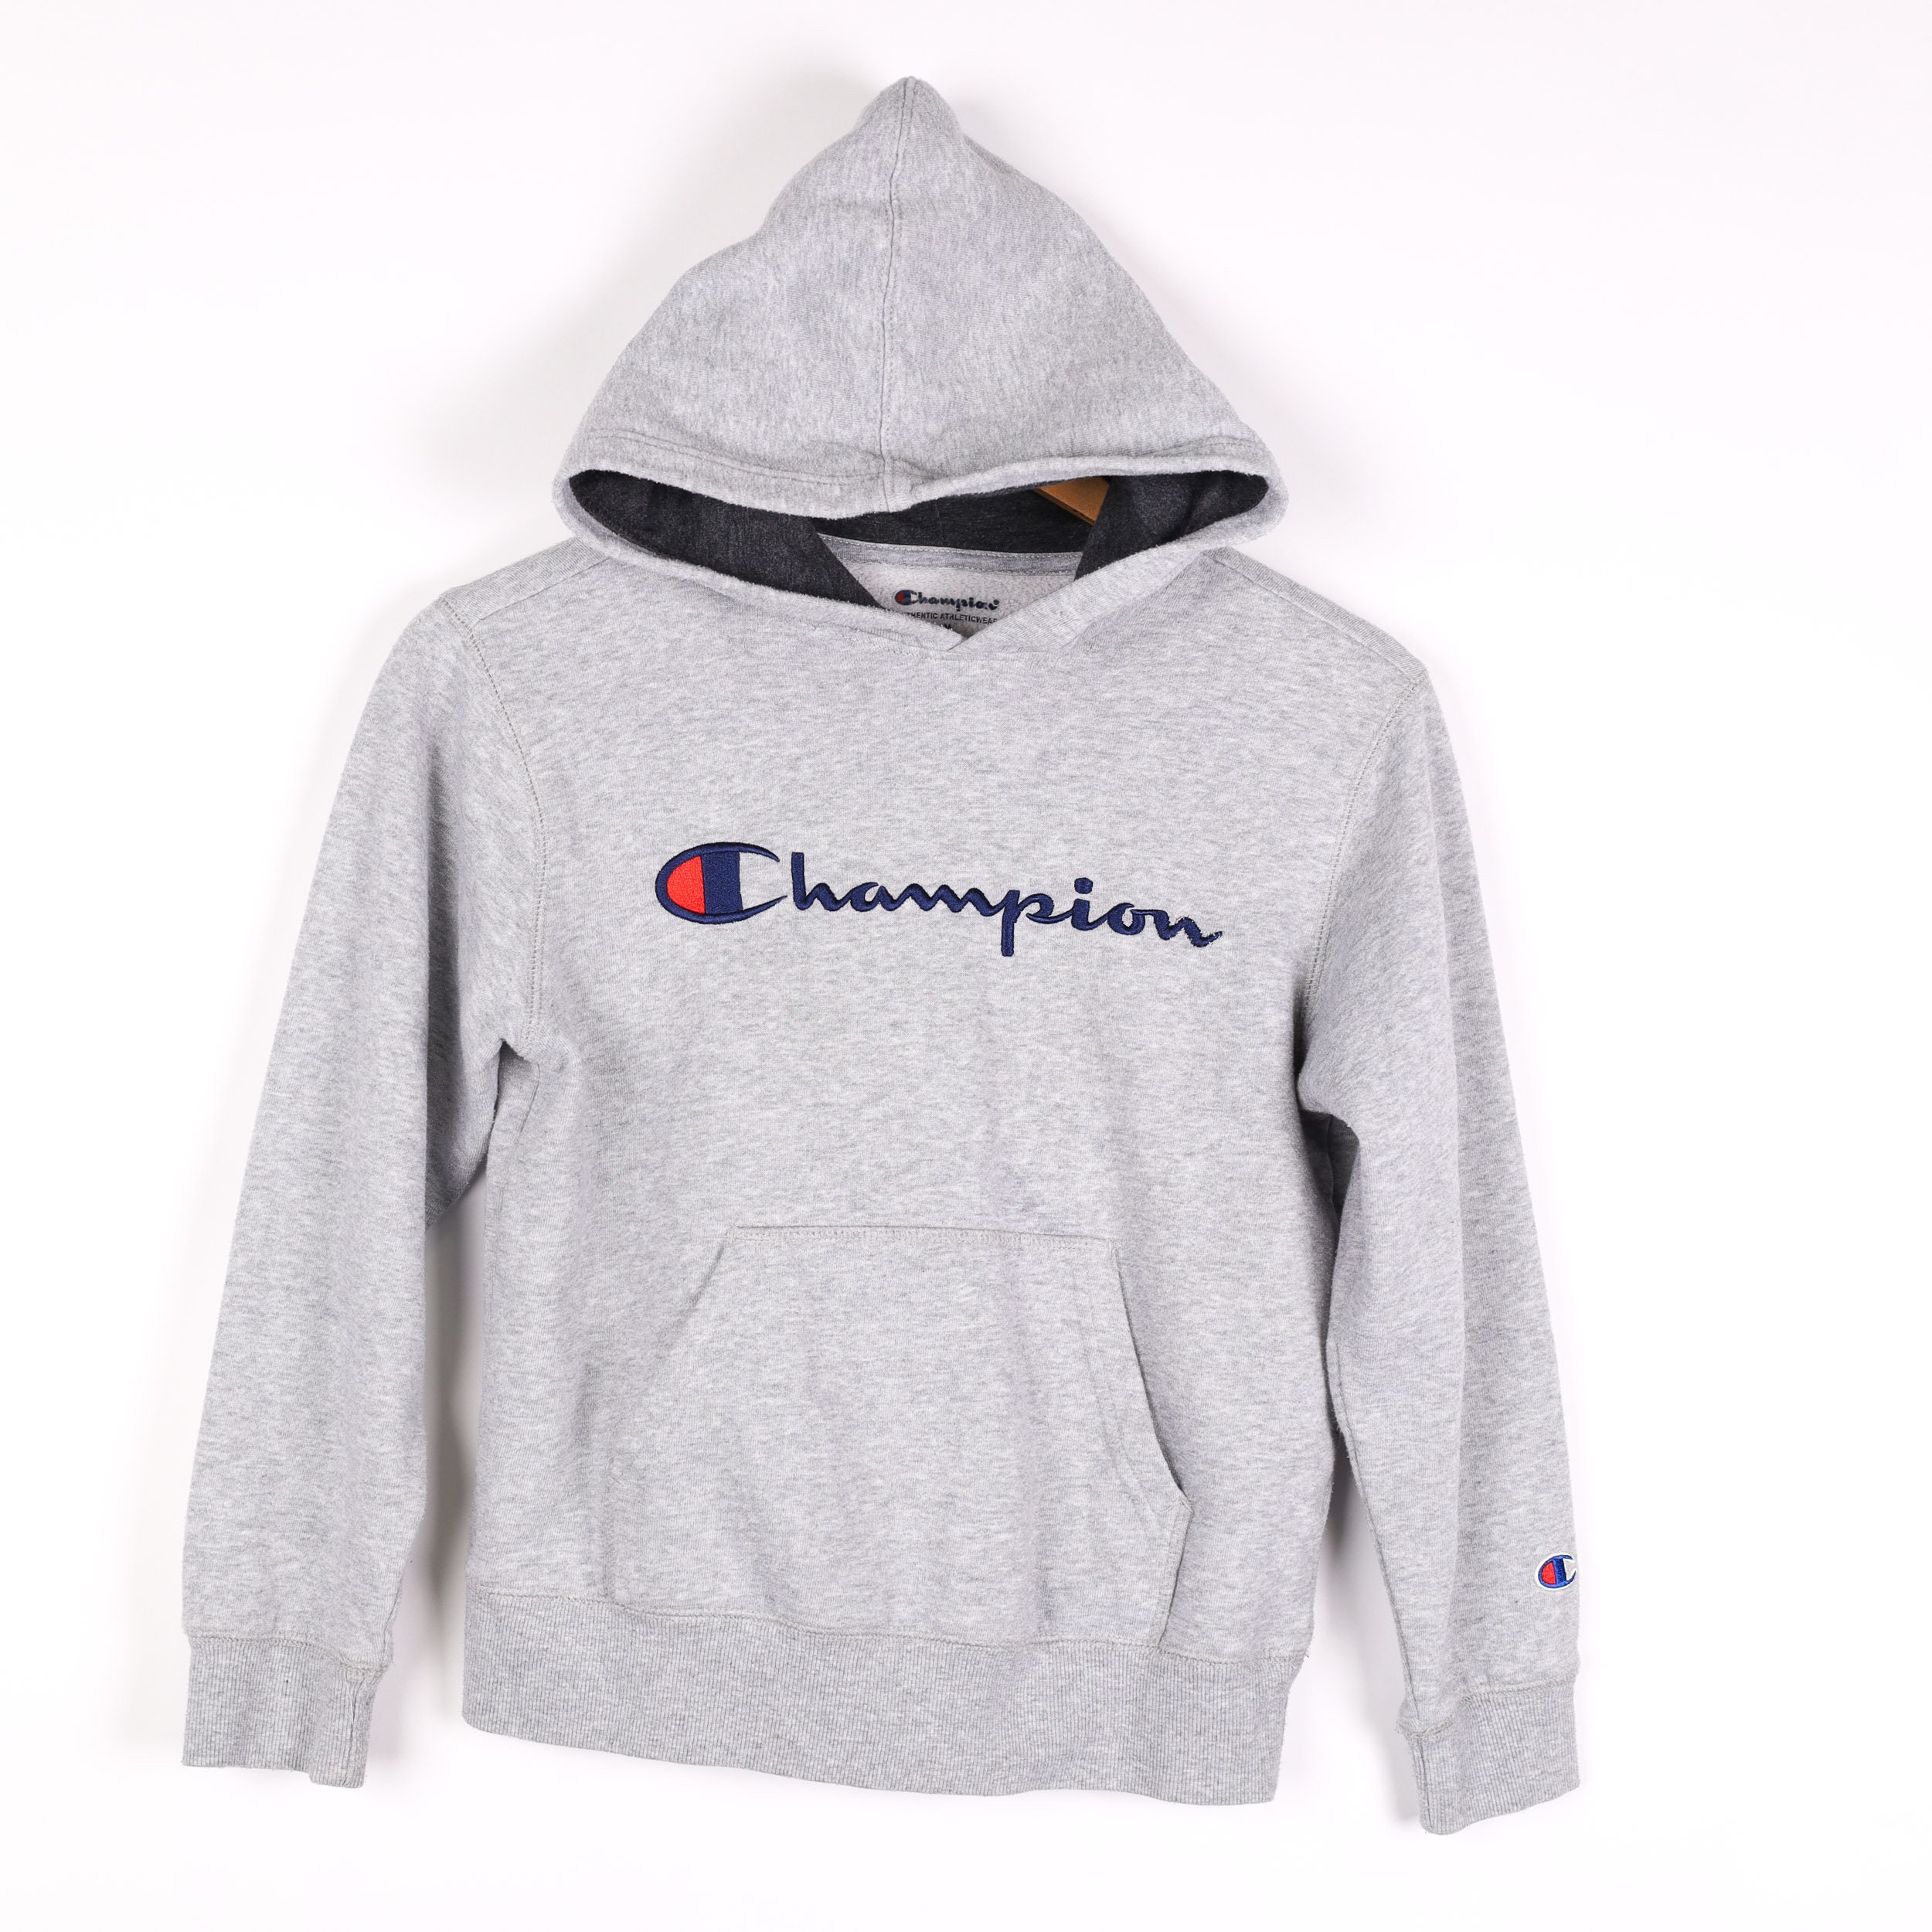 Champion Hoodie Sweatshirt / Youth / Kids Grey Sweater -